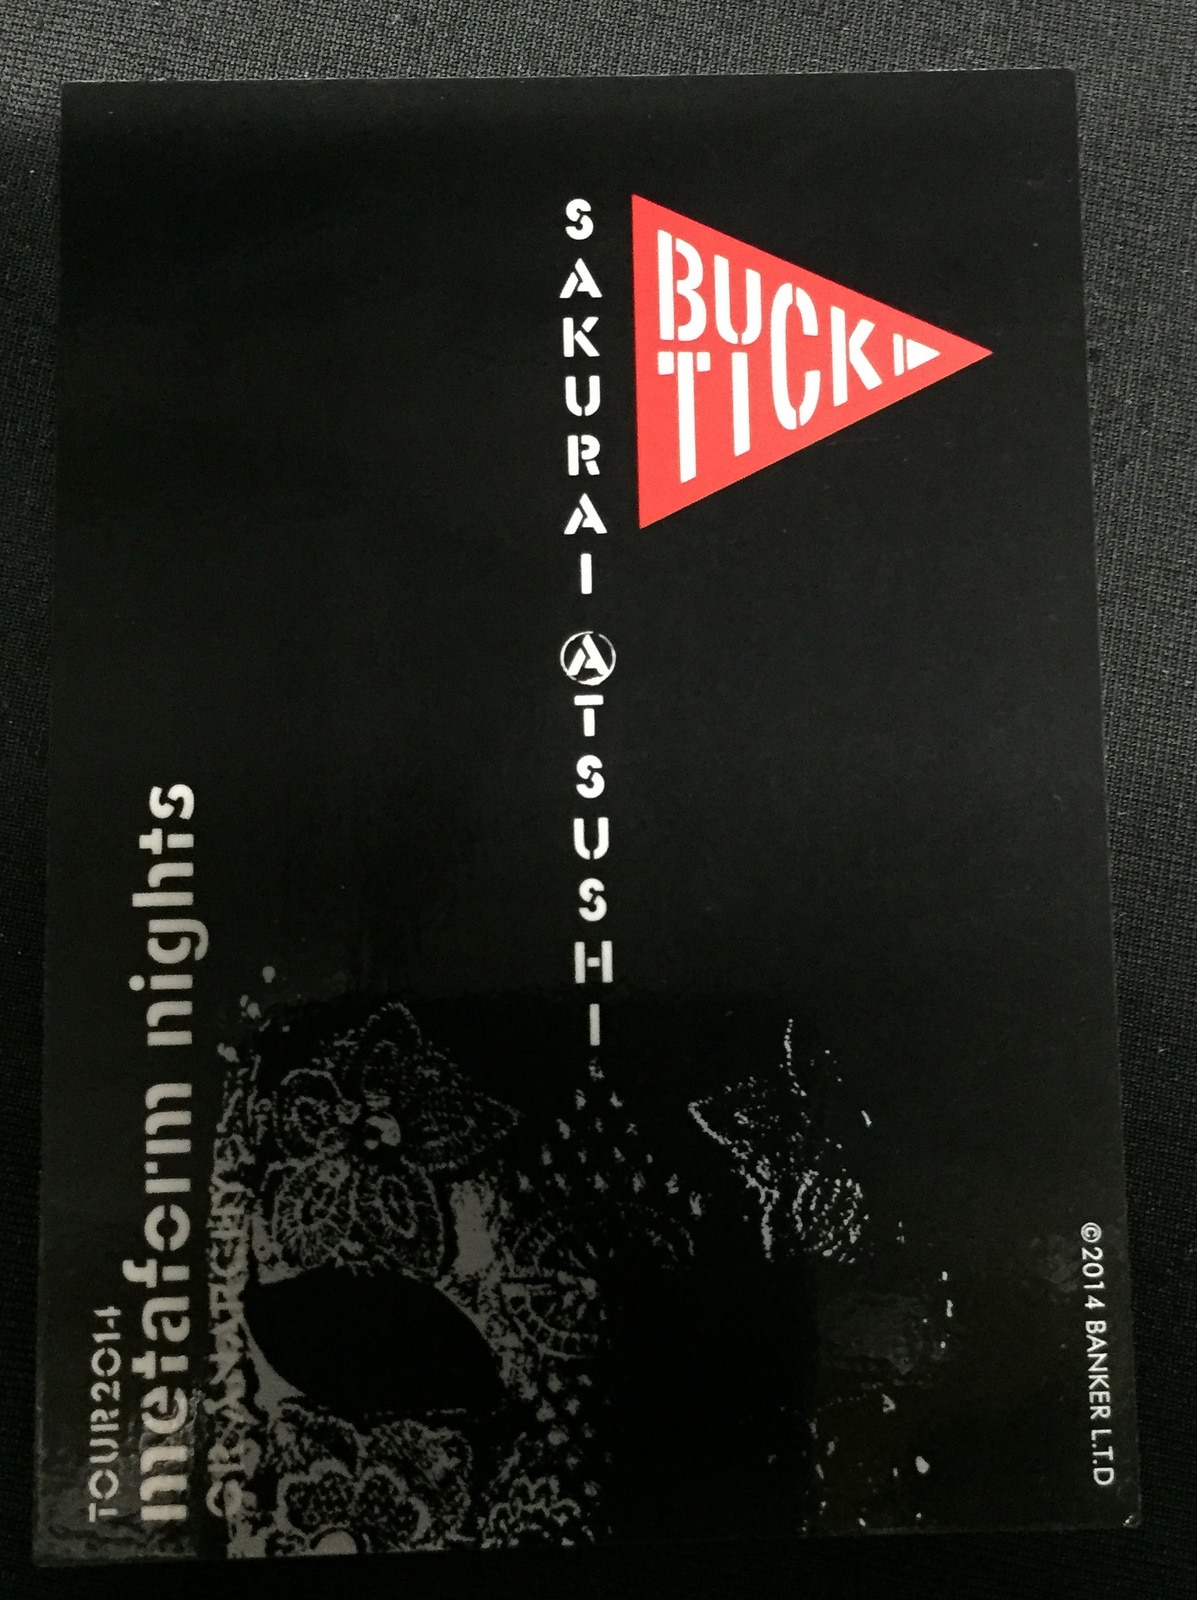 BUCK-TICK TOUR 2014 metaform nights ～或いはアナーキー～ 櫻井敦司 